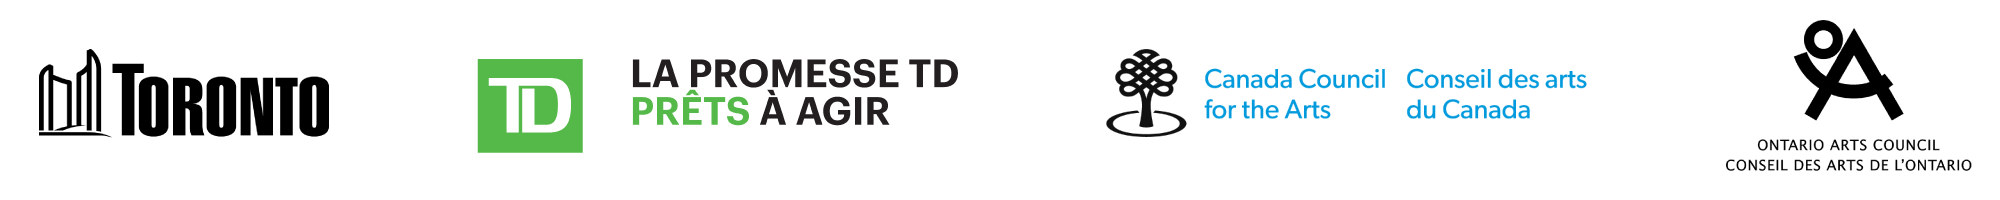 Logos for City of Toronto and French version logos for TD La promesse TD prêts à agir, Conseil des arts du Canada, Conseil des arts de l'Ontario 